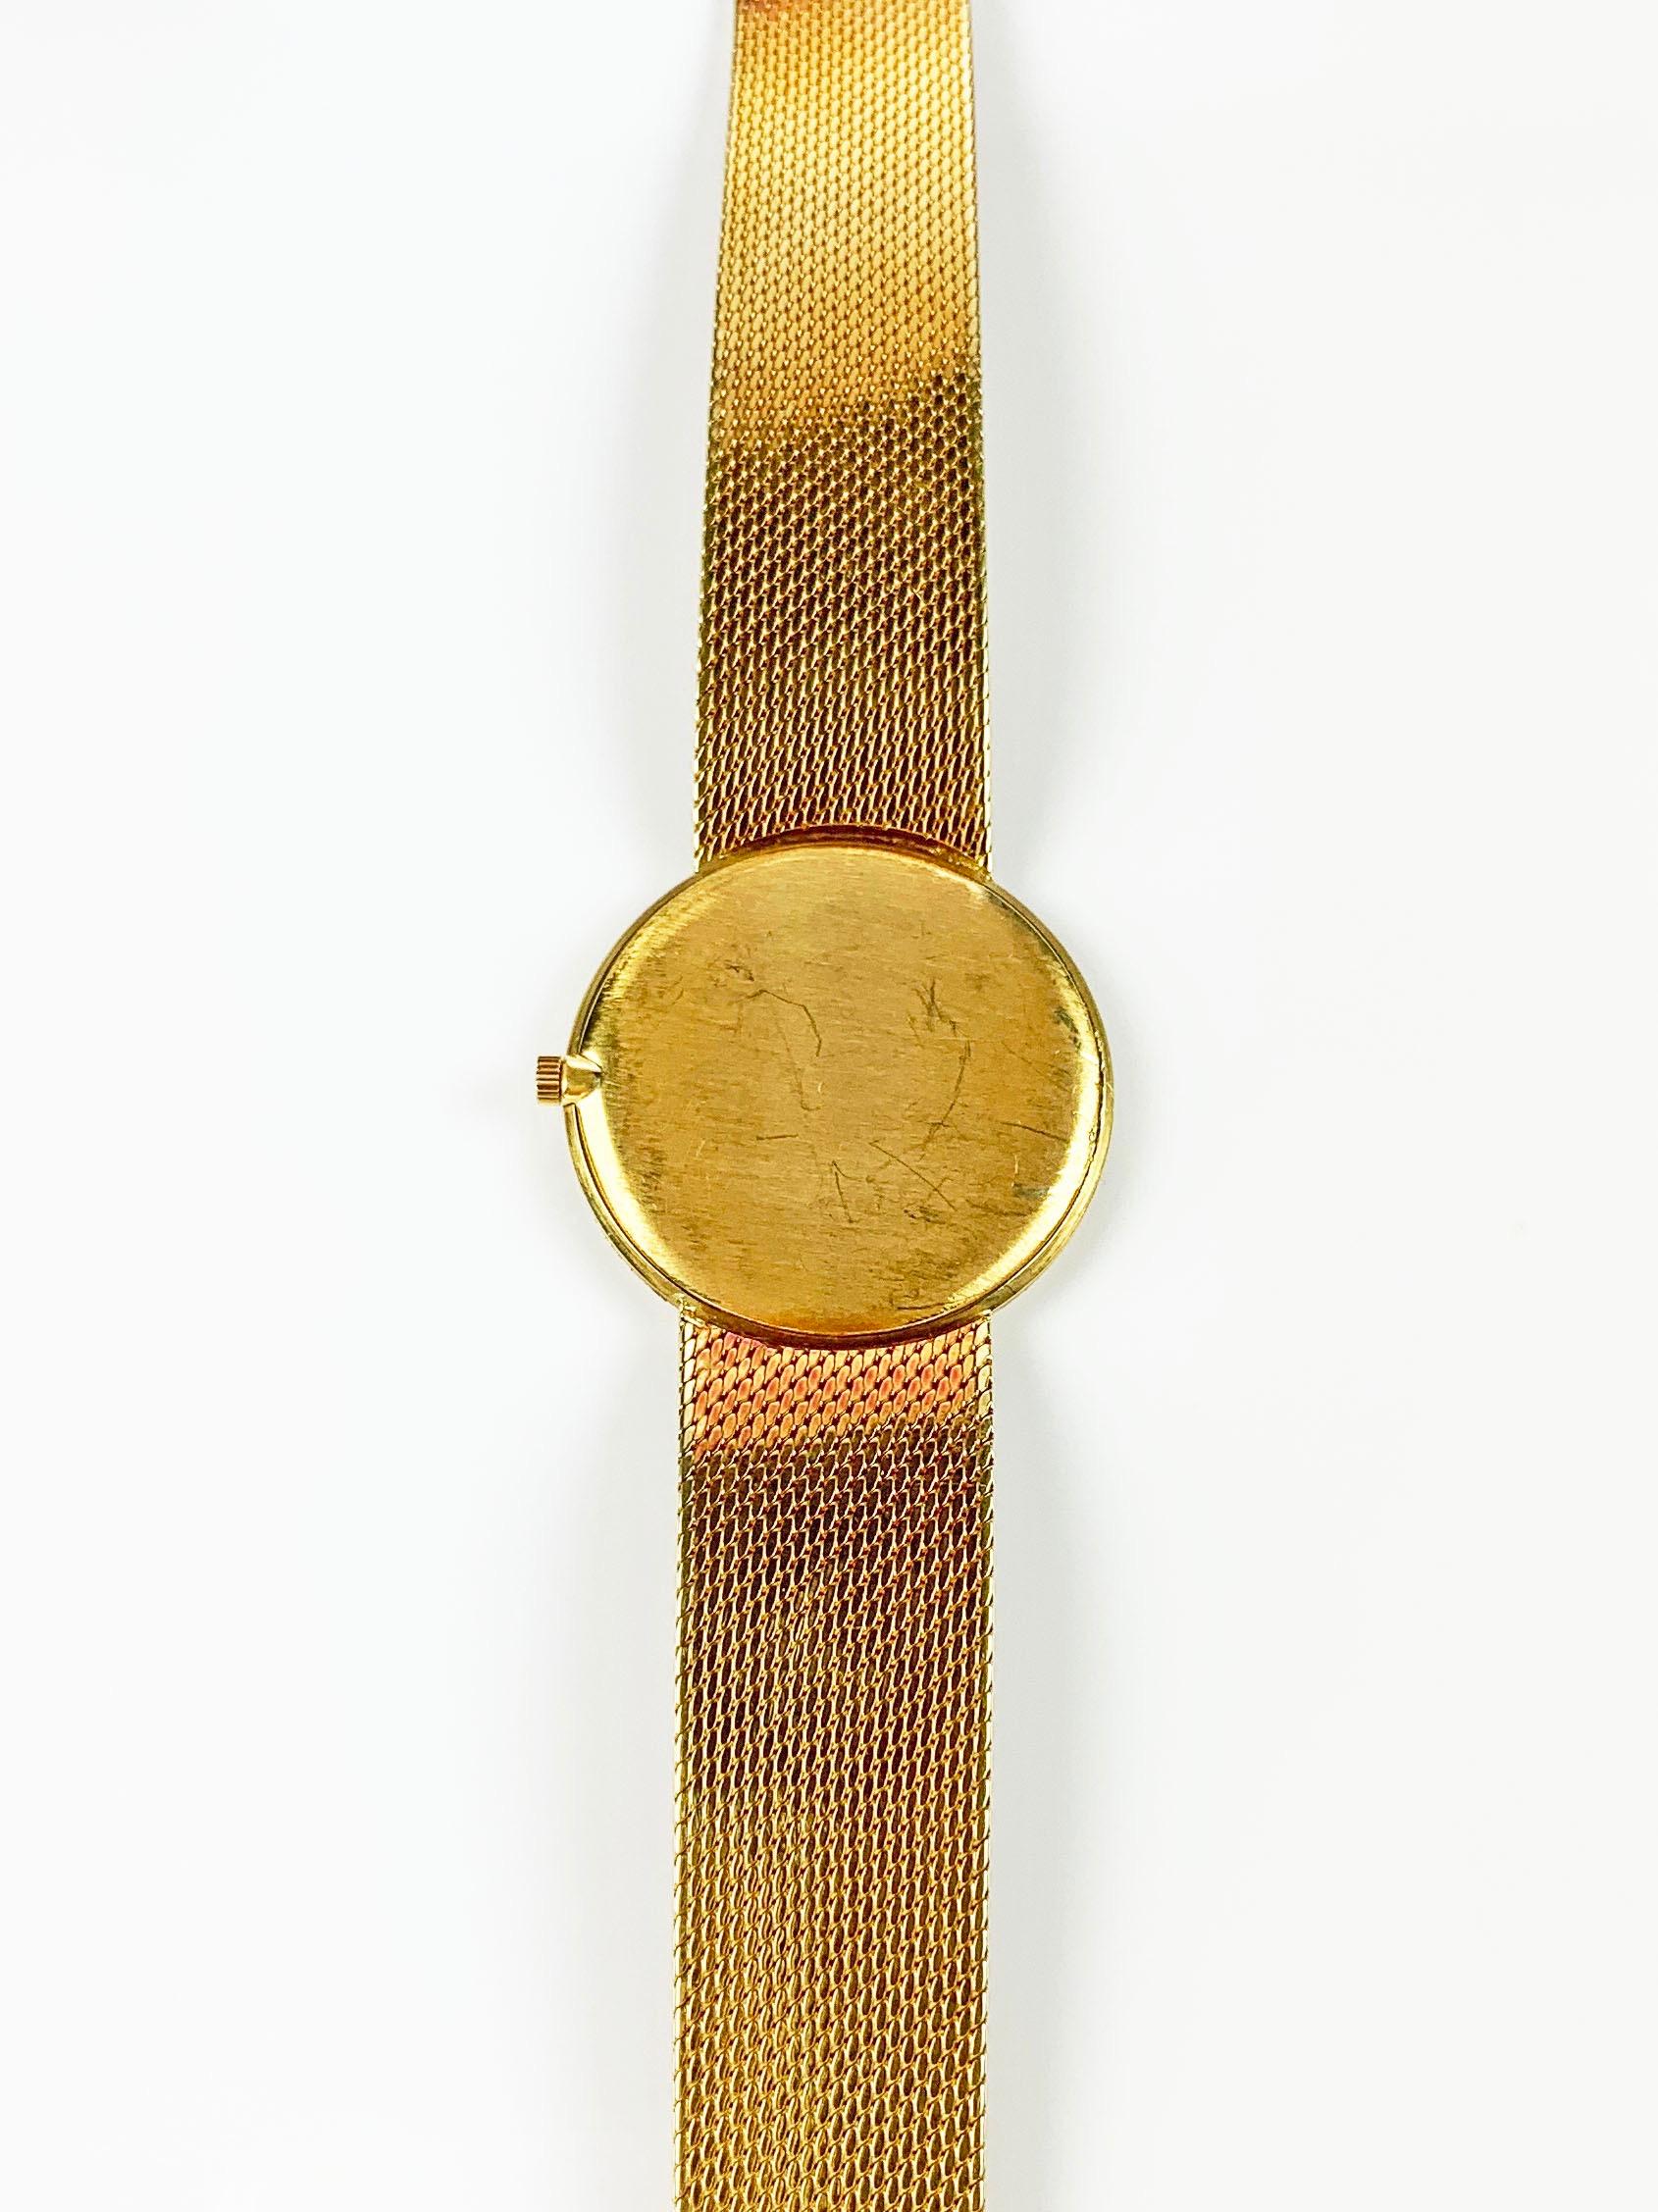 Vacheron Constantin 18 Karat Yellow Gold Ultra Thin Manual Wind Watch, 1960s For Sale 4